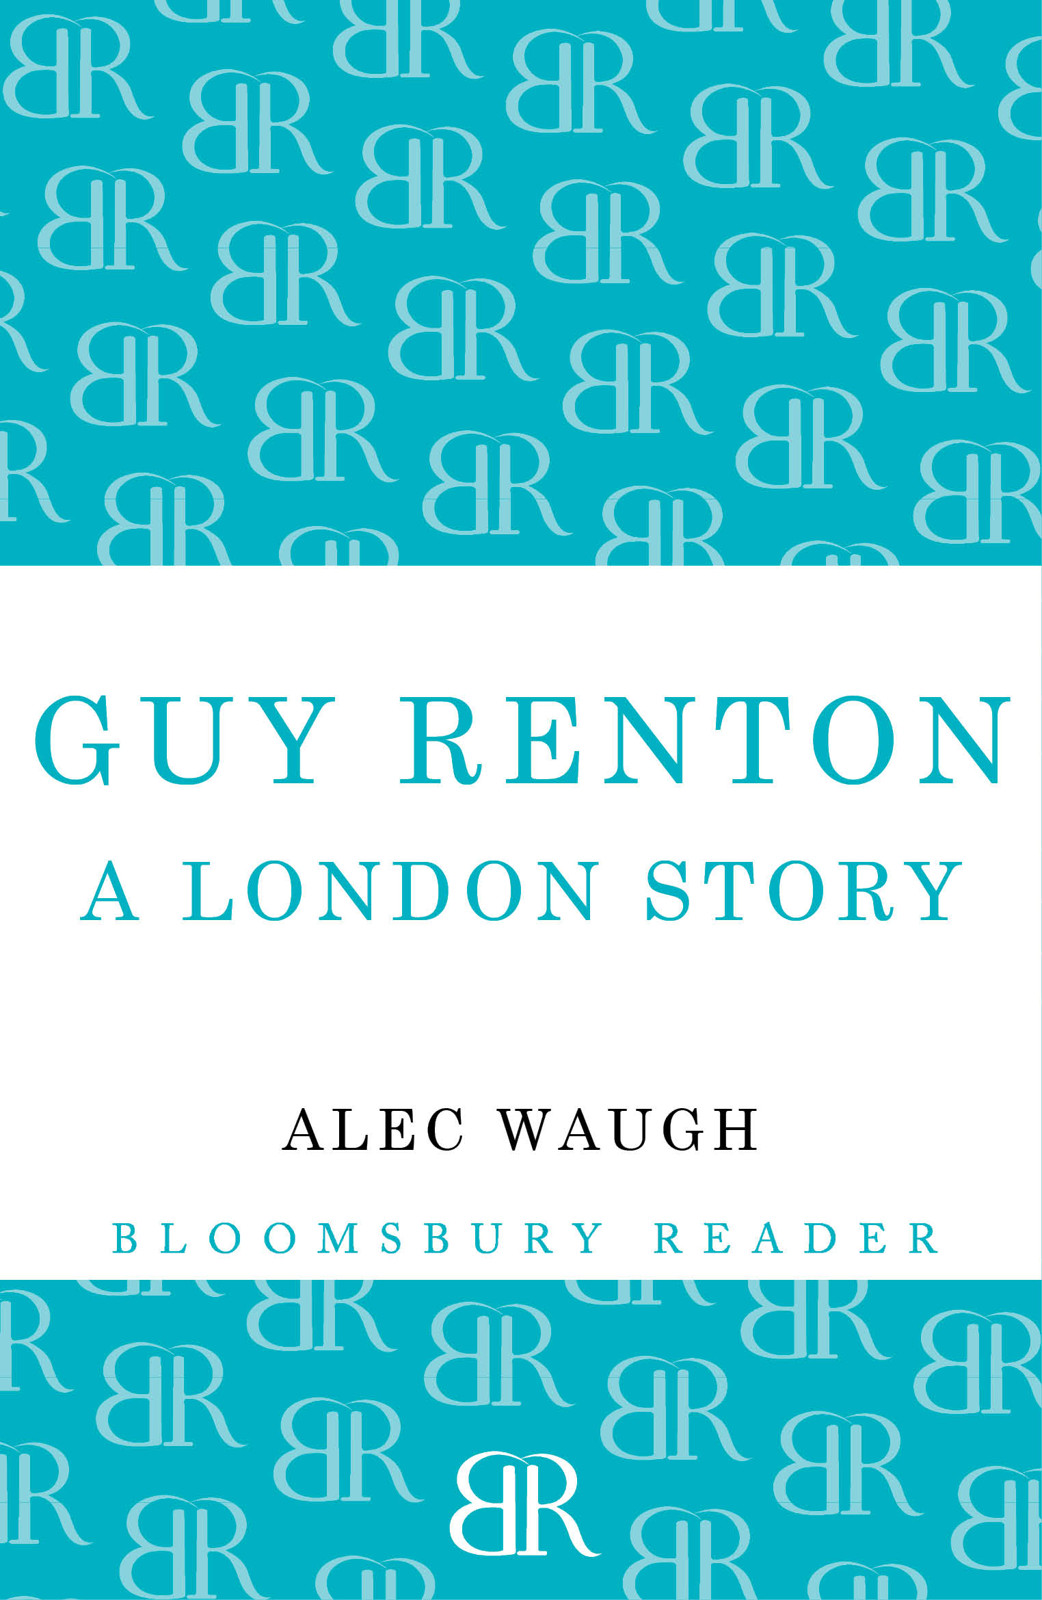 Guy Renton by Alec Waugh